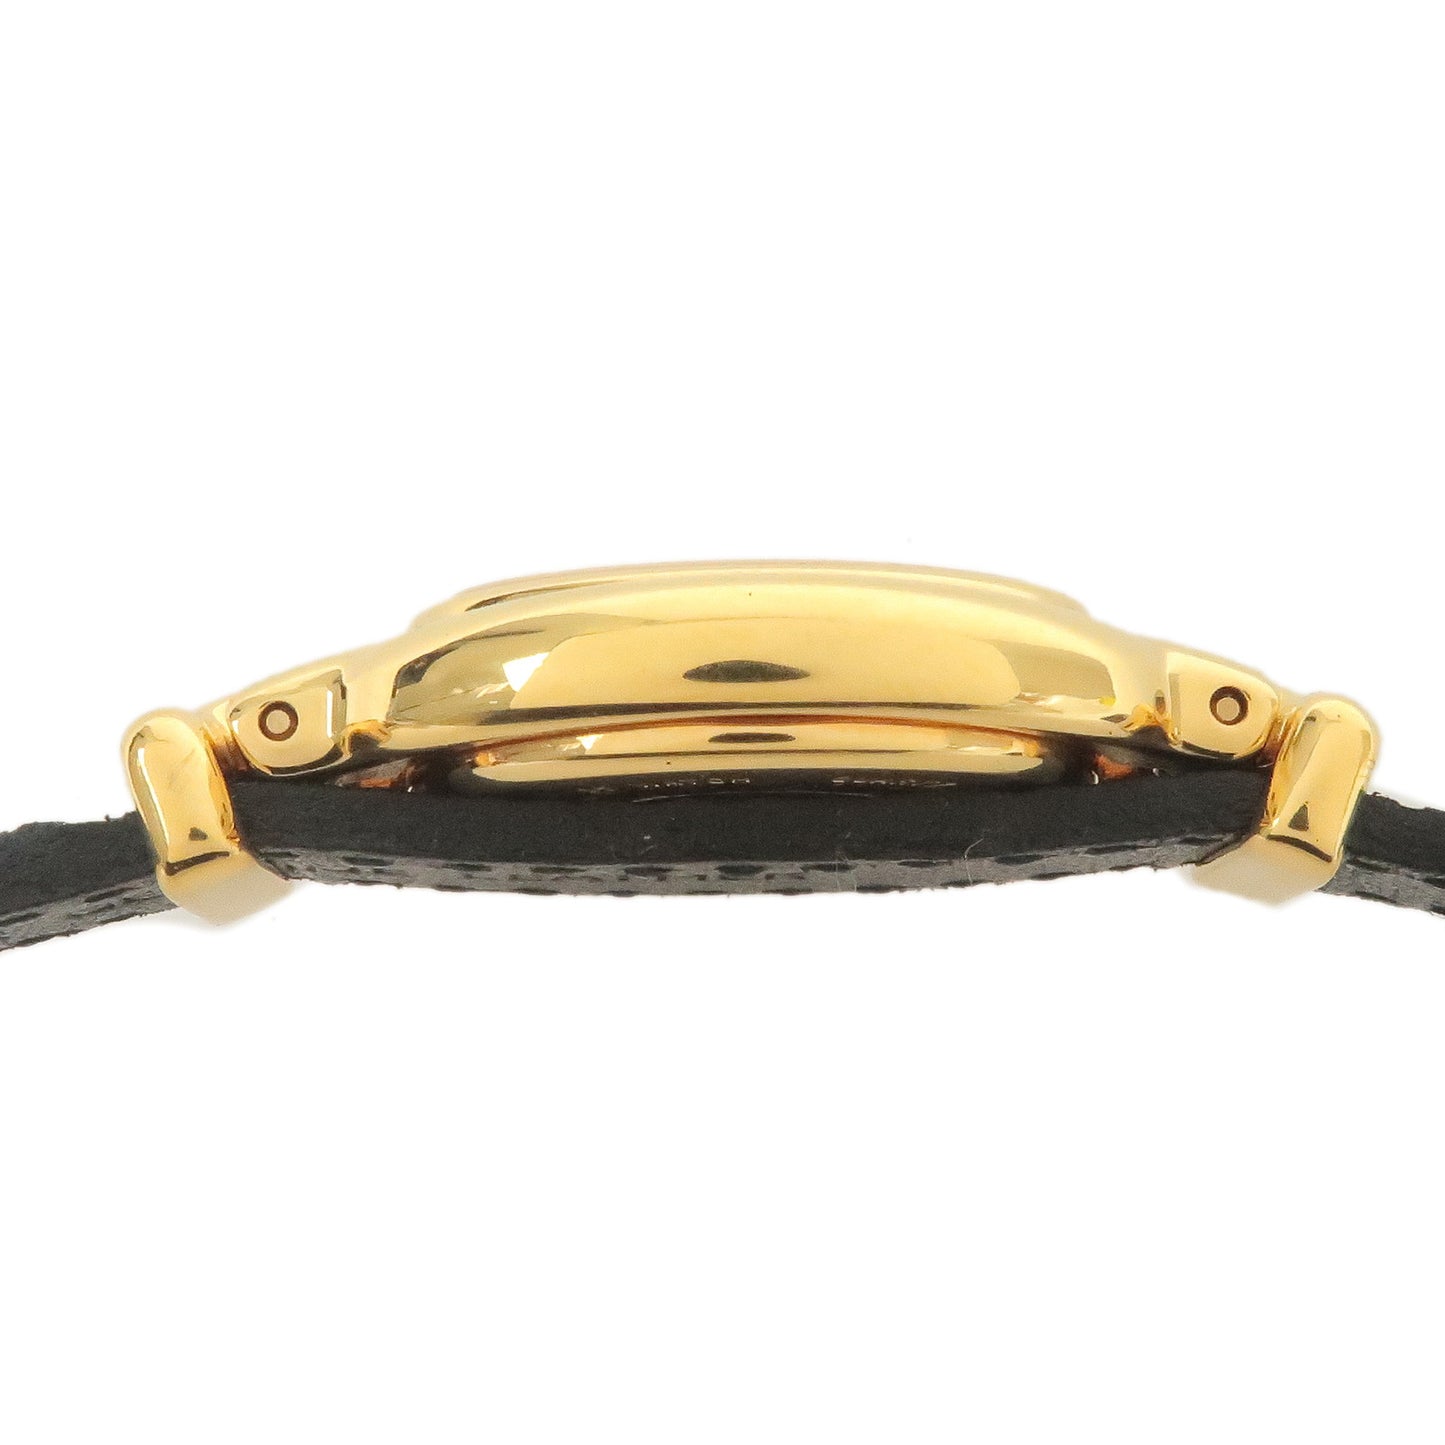 FENDI Chameleon Watch Ladies Changeable Leather Belt Wrist Watch Quartz 640L